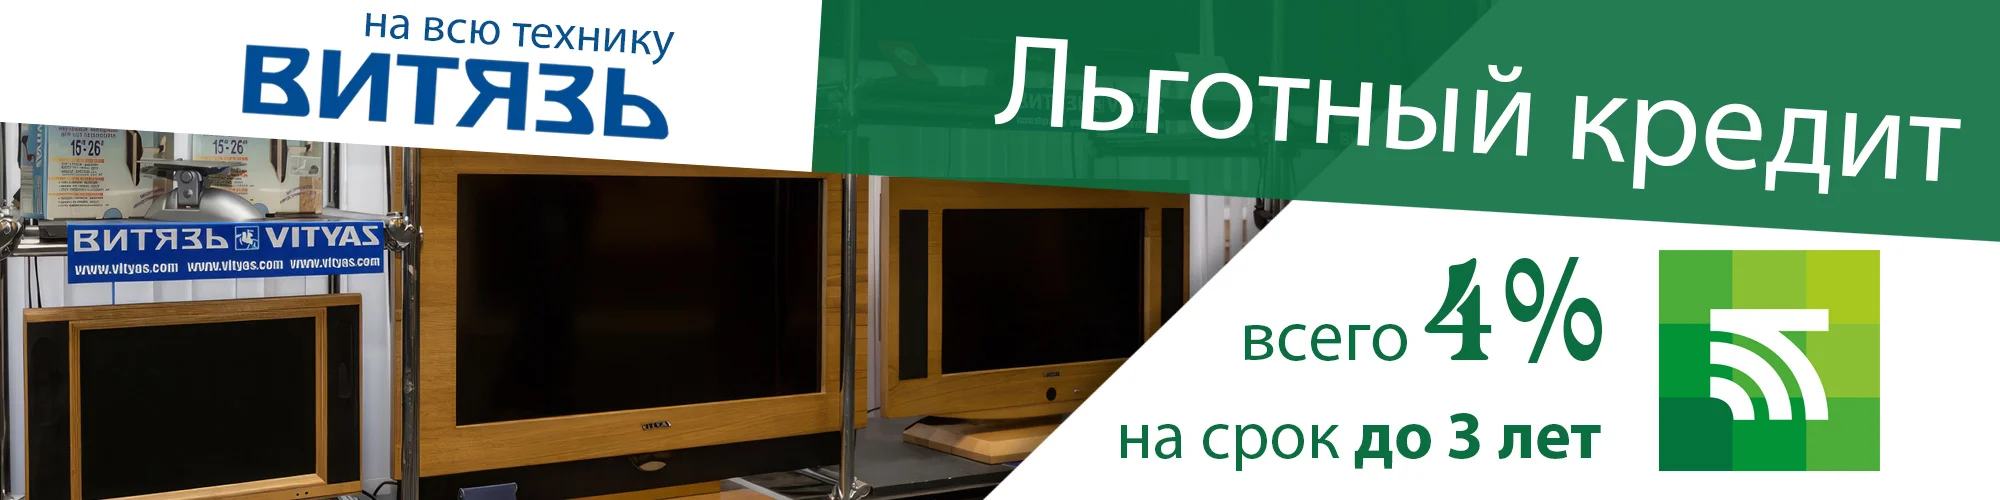 Кредит 4% на технику белорусского производства